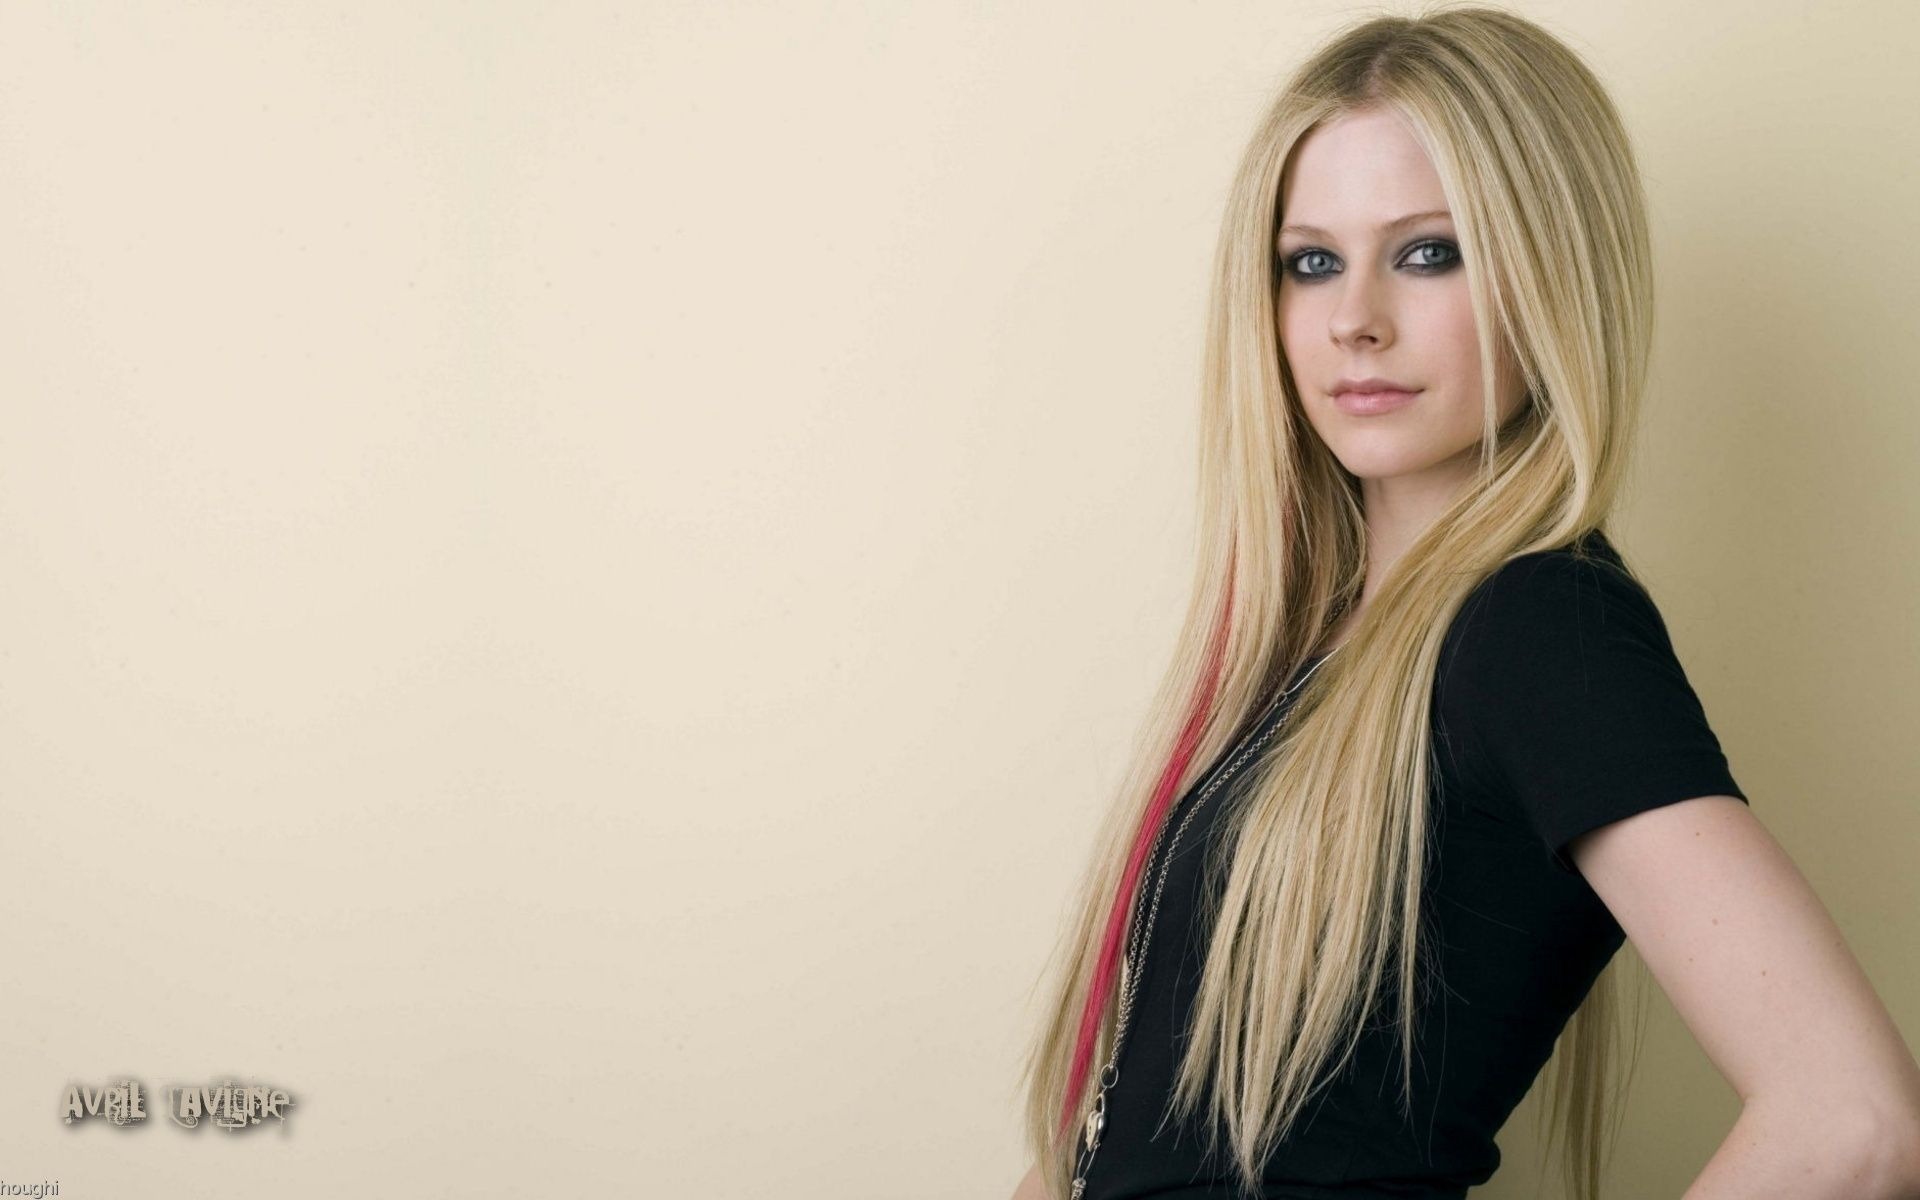 Avril Lavigne beautiful wallpaper #8 - 1920x1200